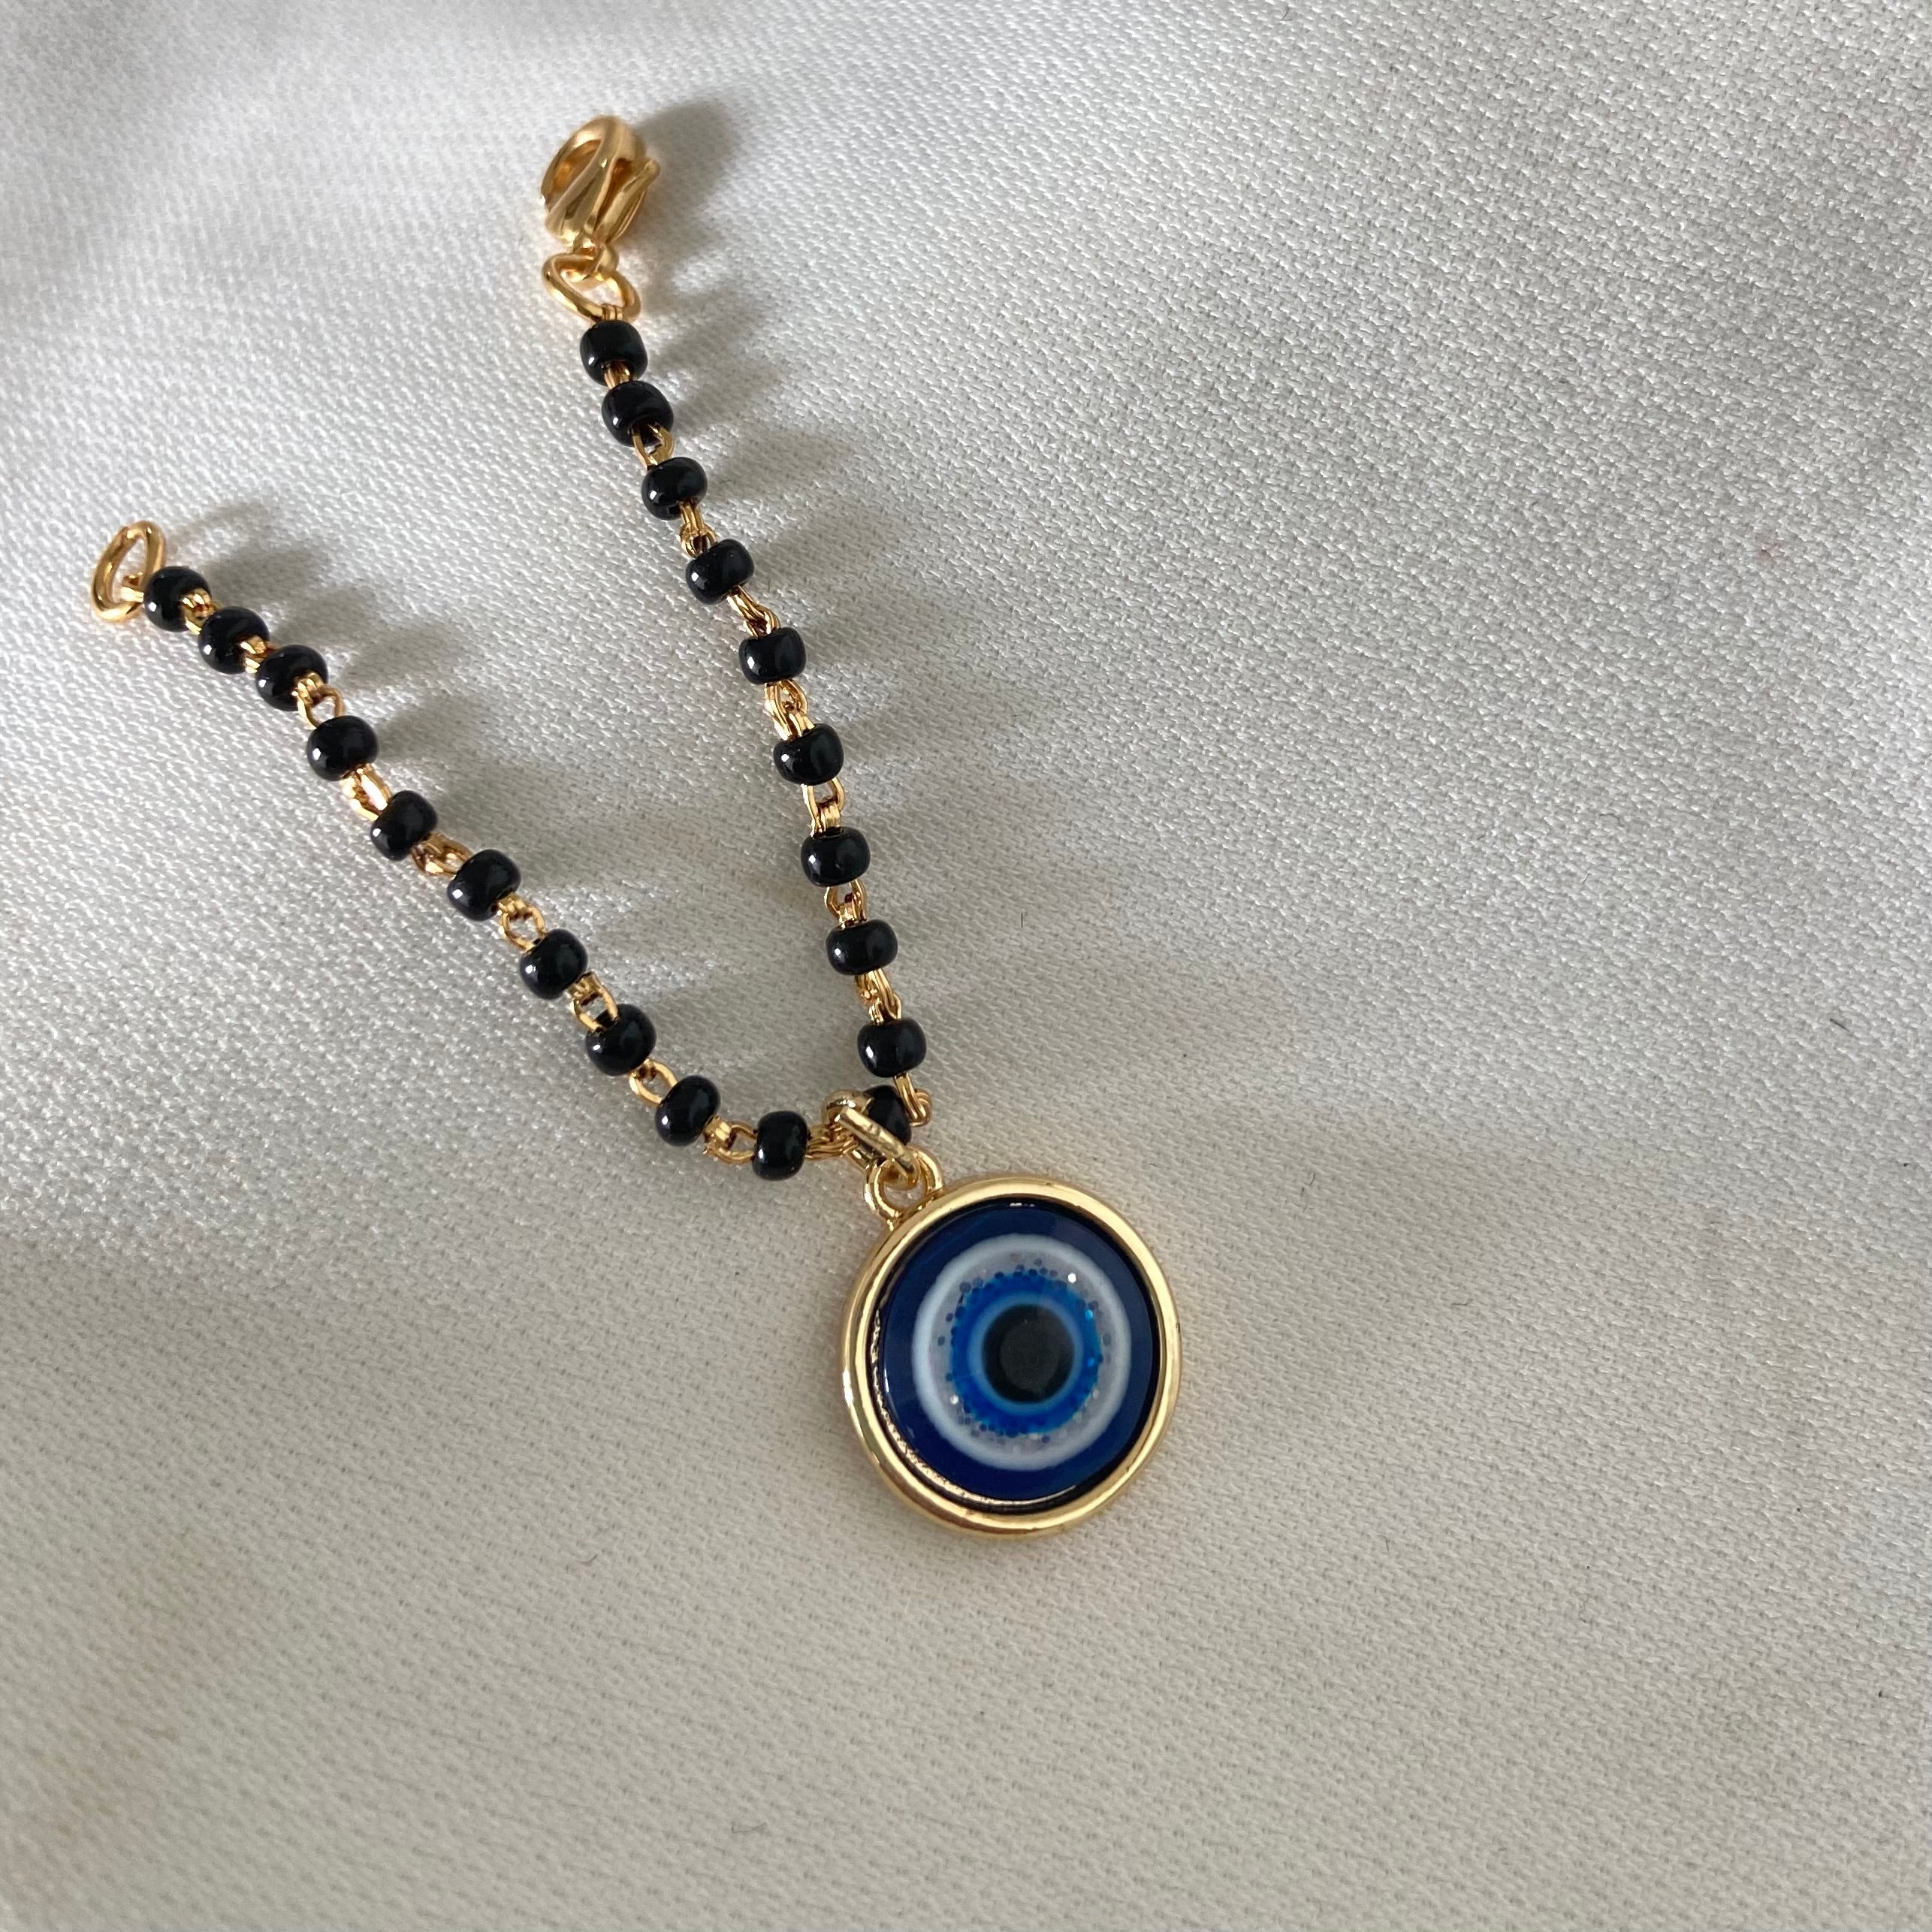 Blue Eye Evileye Mangalsutra Bracelets - Upakarna Jewelry